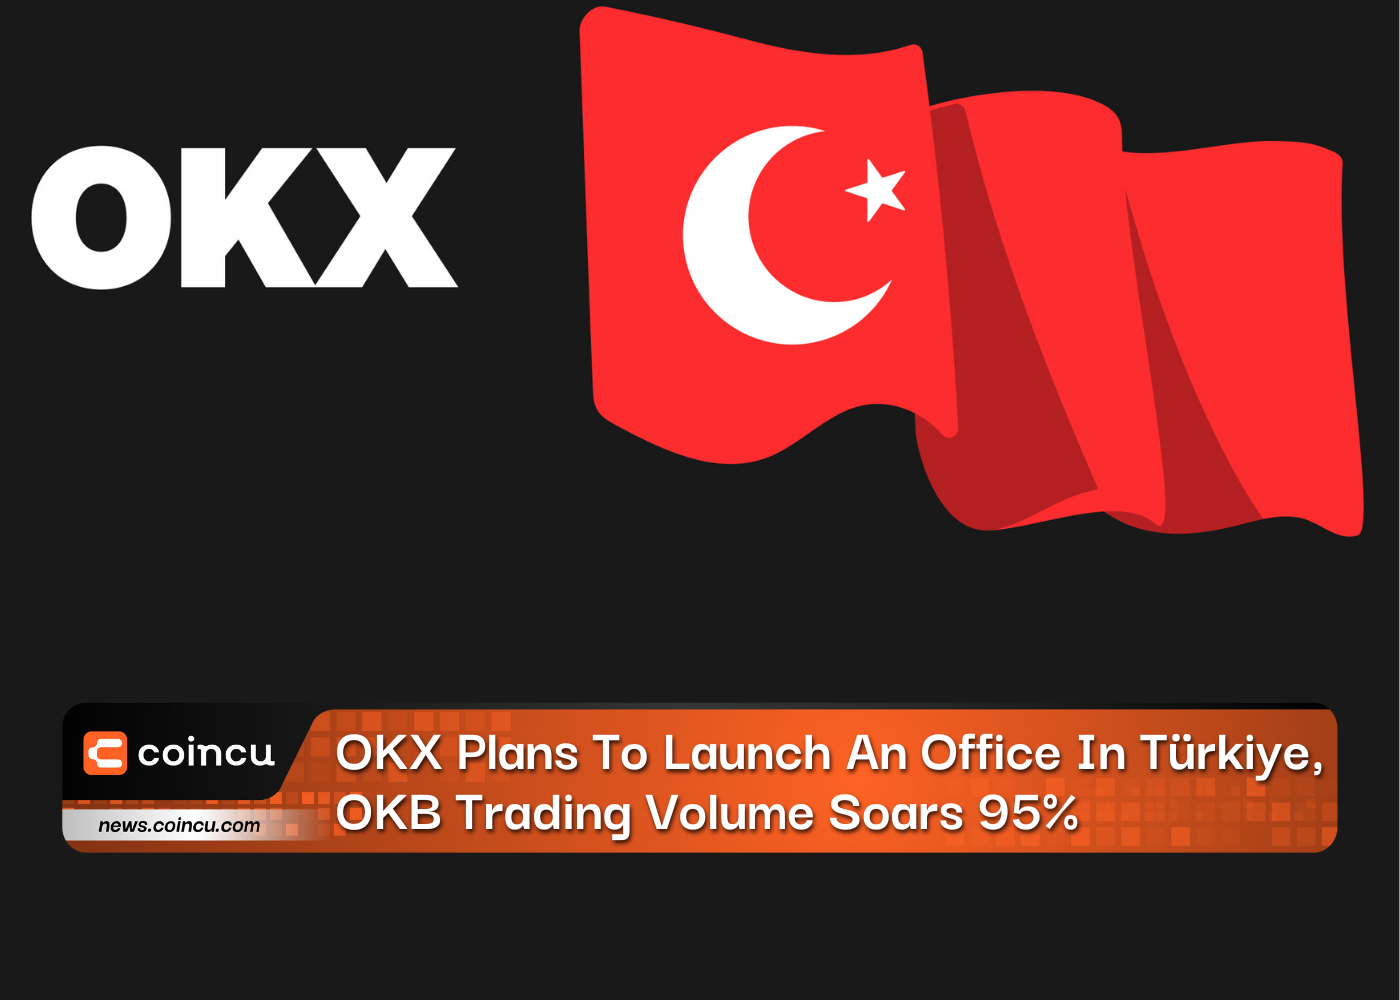 OKX Plans To Launch An Office In Türkiye, OKB Trading Volume Soars 95%